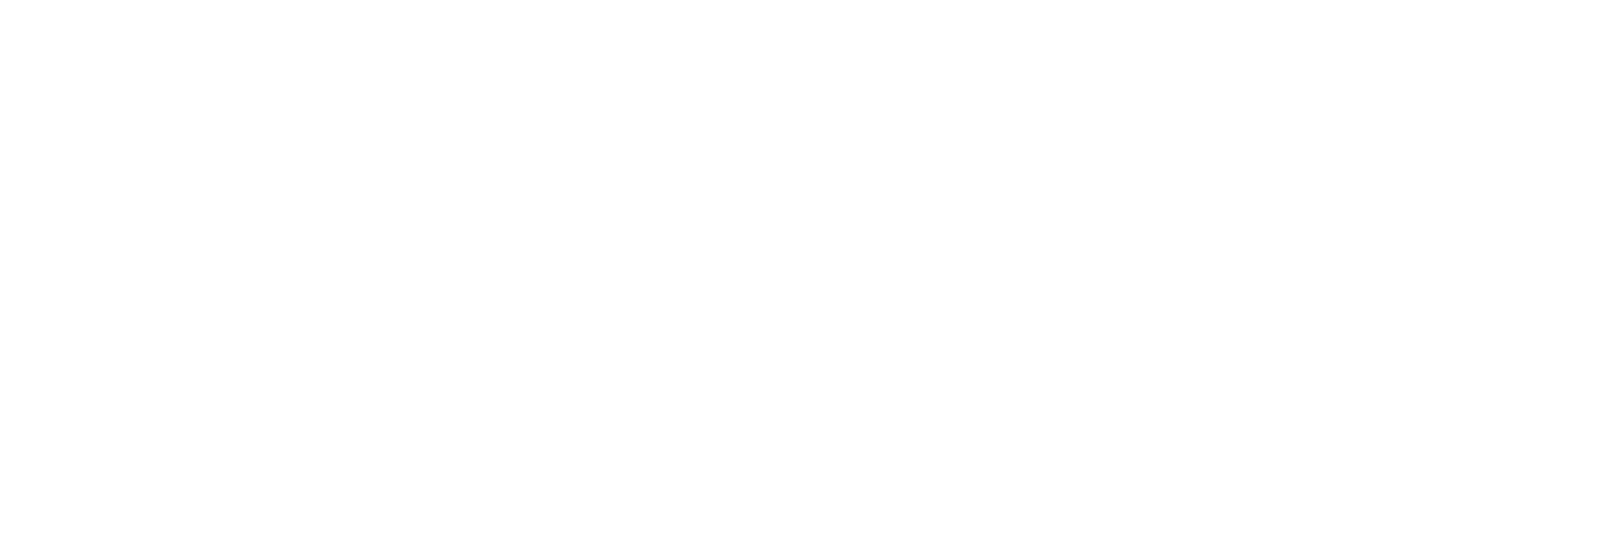 Folxlore Design